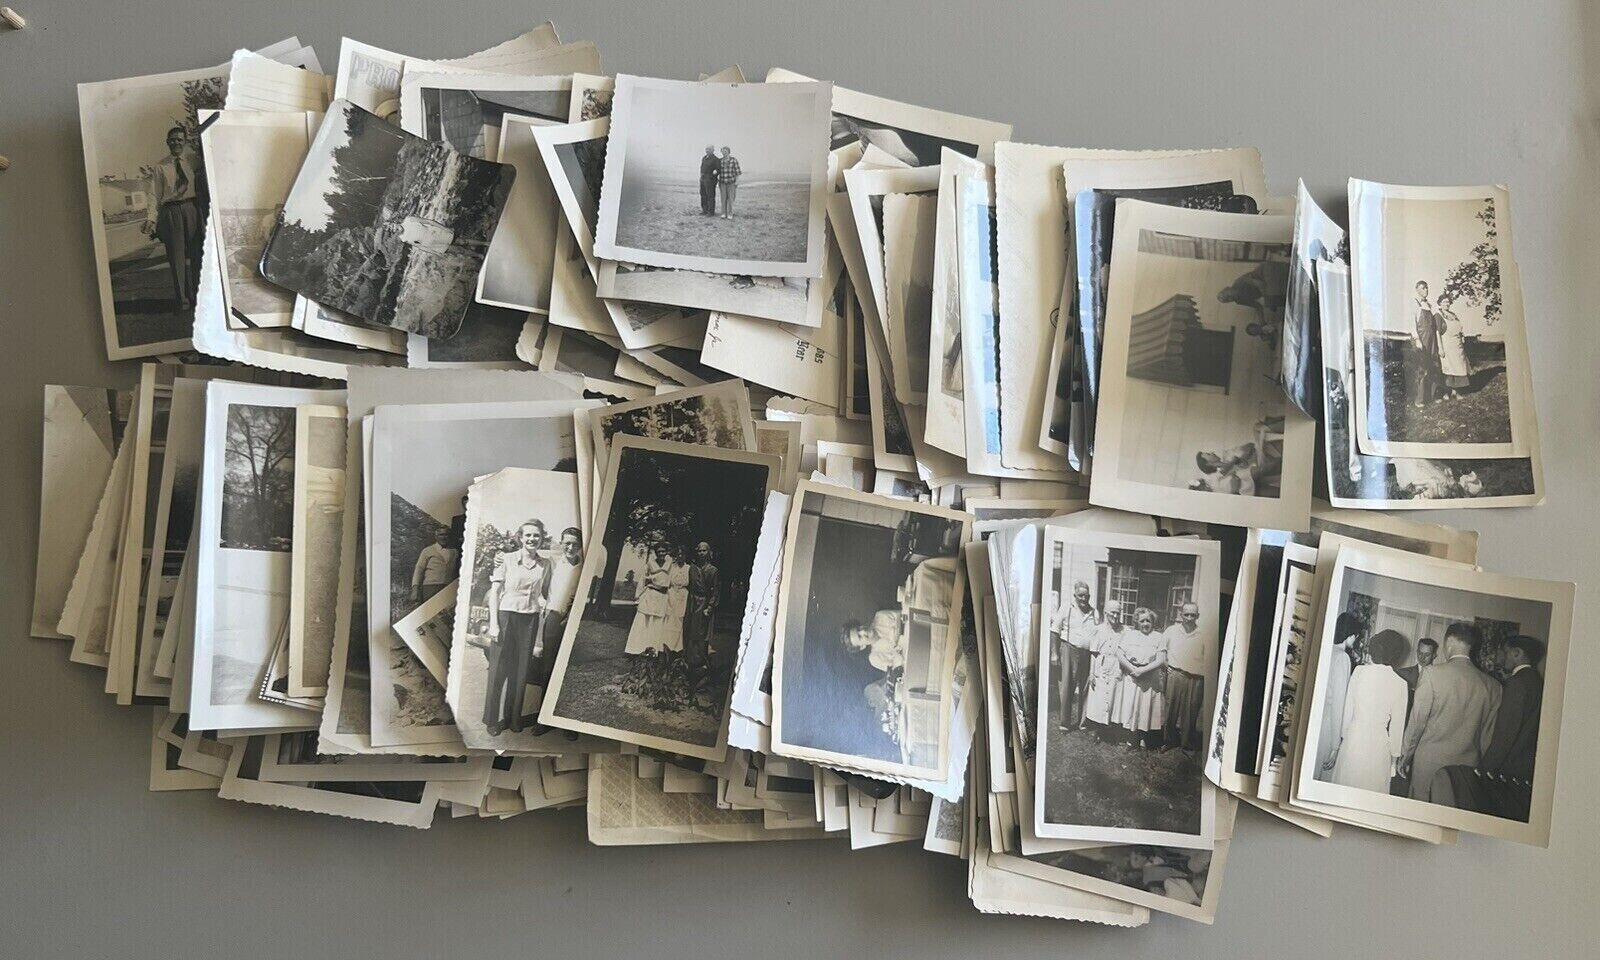 LOT OF 25 ORIGINAL RANDOM FOUND OLD PHOTOGRAPHS B&W SEPIA VINTAGE SNAPSHOTS